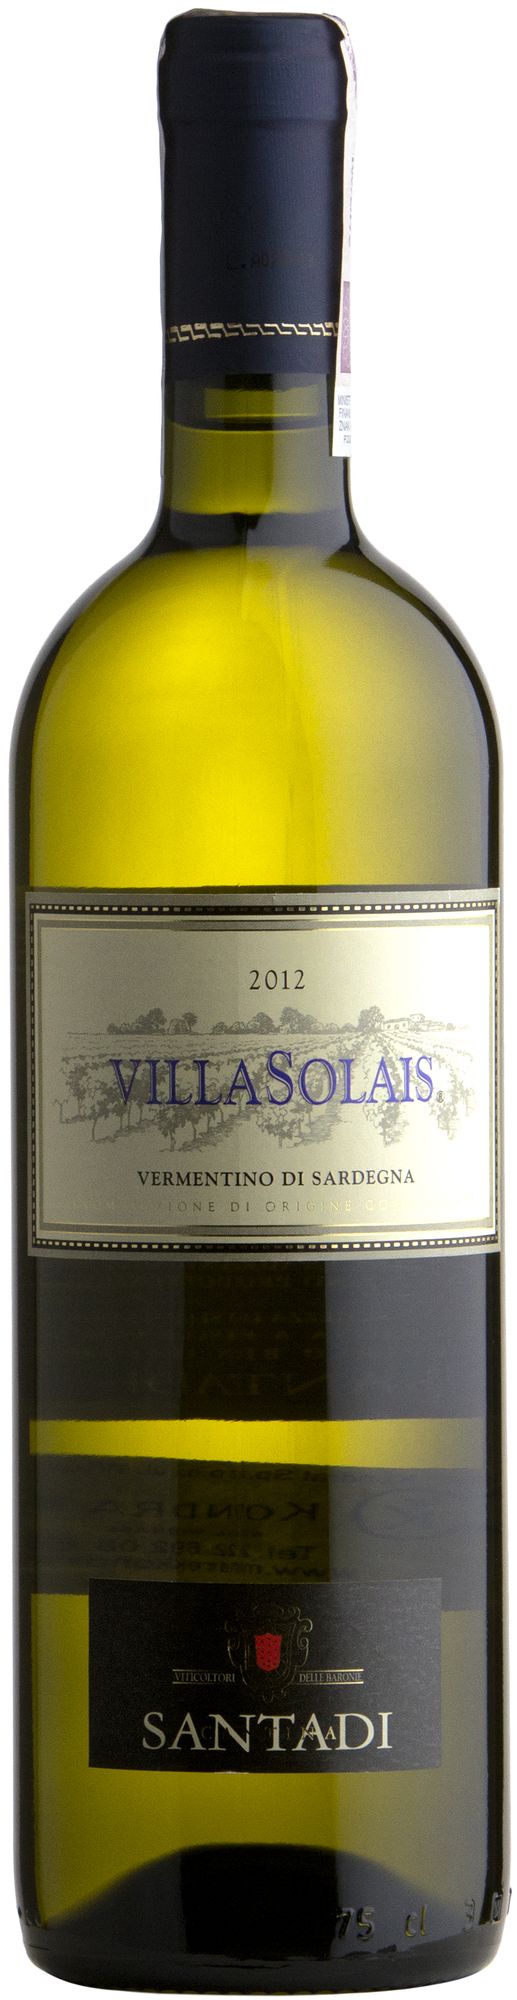 Wino Santadi Villa Solais Vermentino di Sardegna DOC